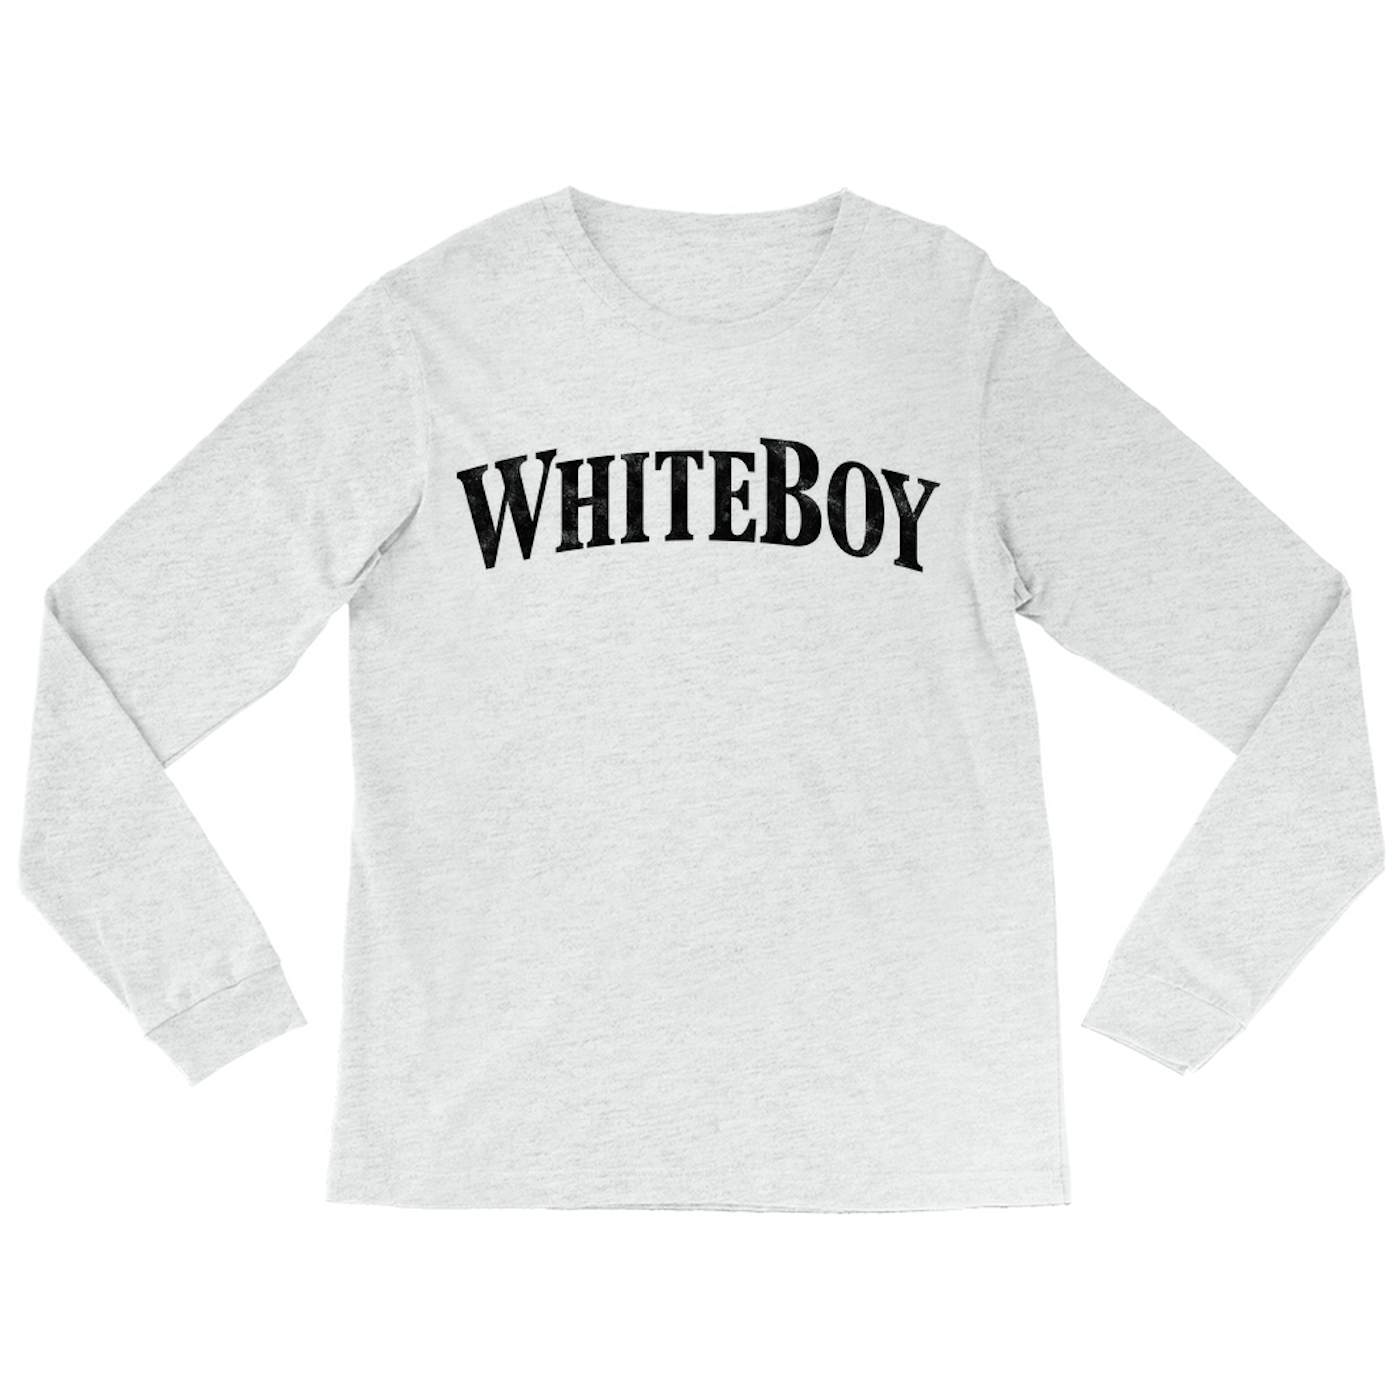 Mötley Crüe Long Sleeve Shirt | White Boy Worn By Tommy Lee Mötley Crüe Shirt